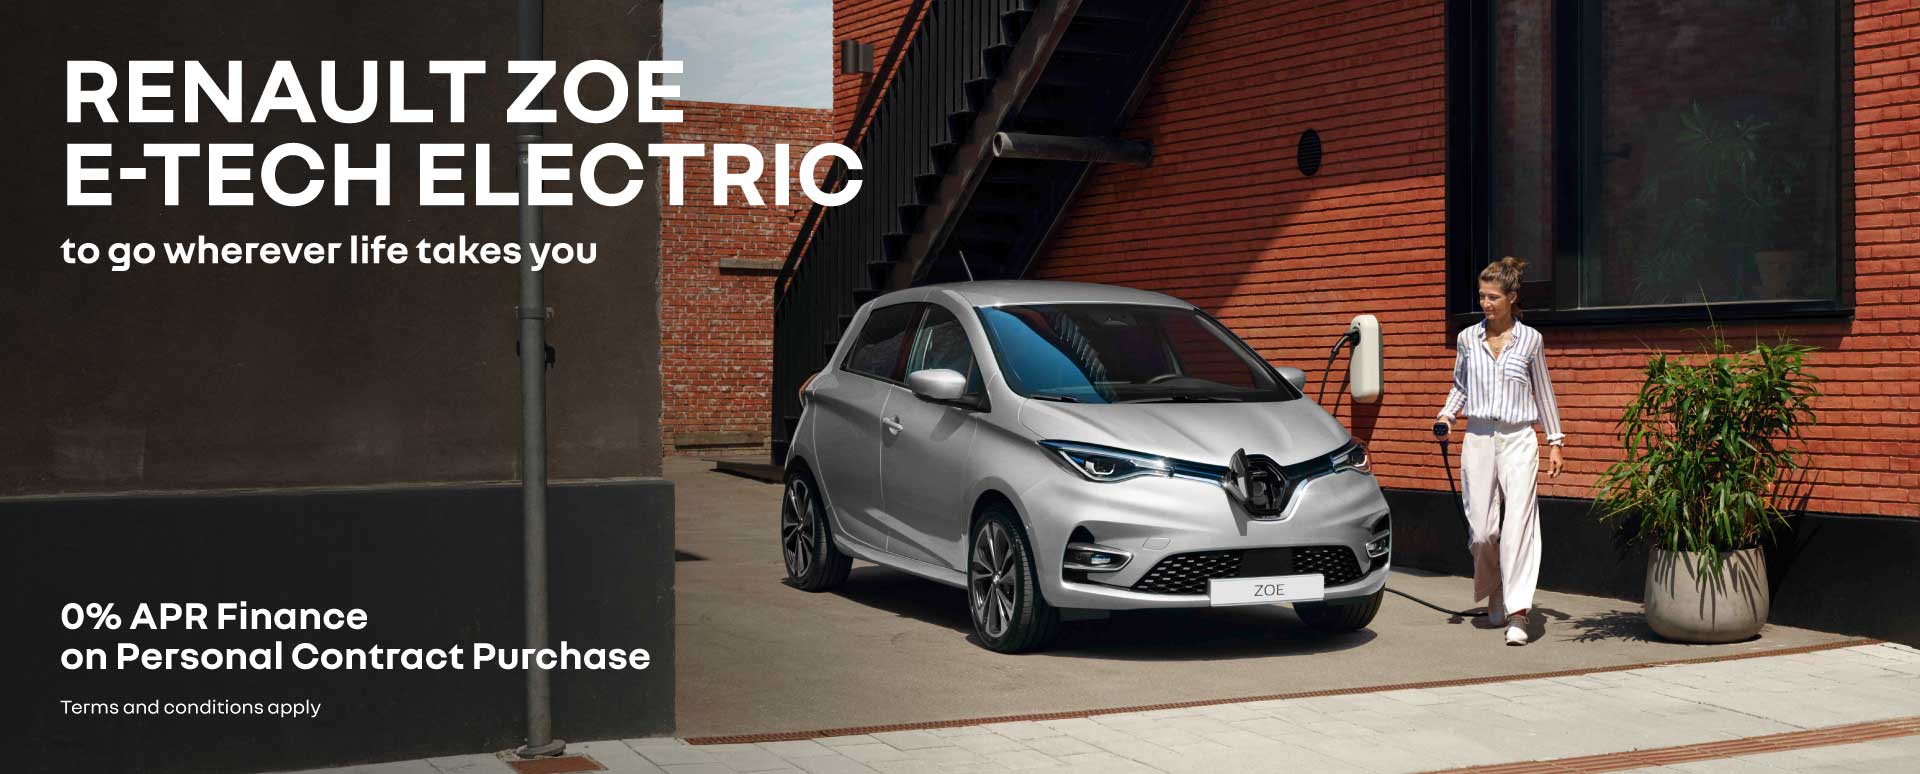 Renault ZOE E-Tech Electric 0 Percent APR